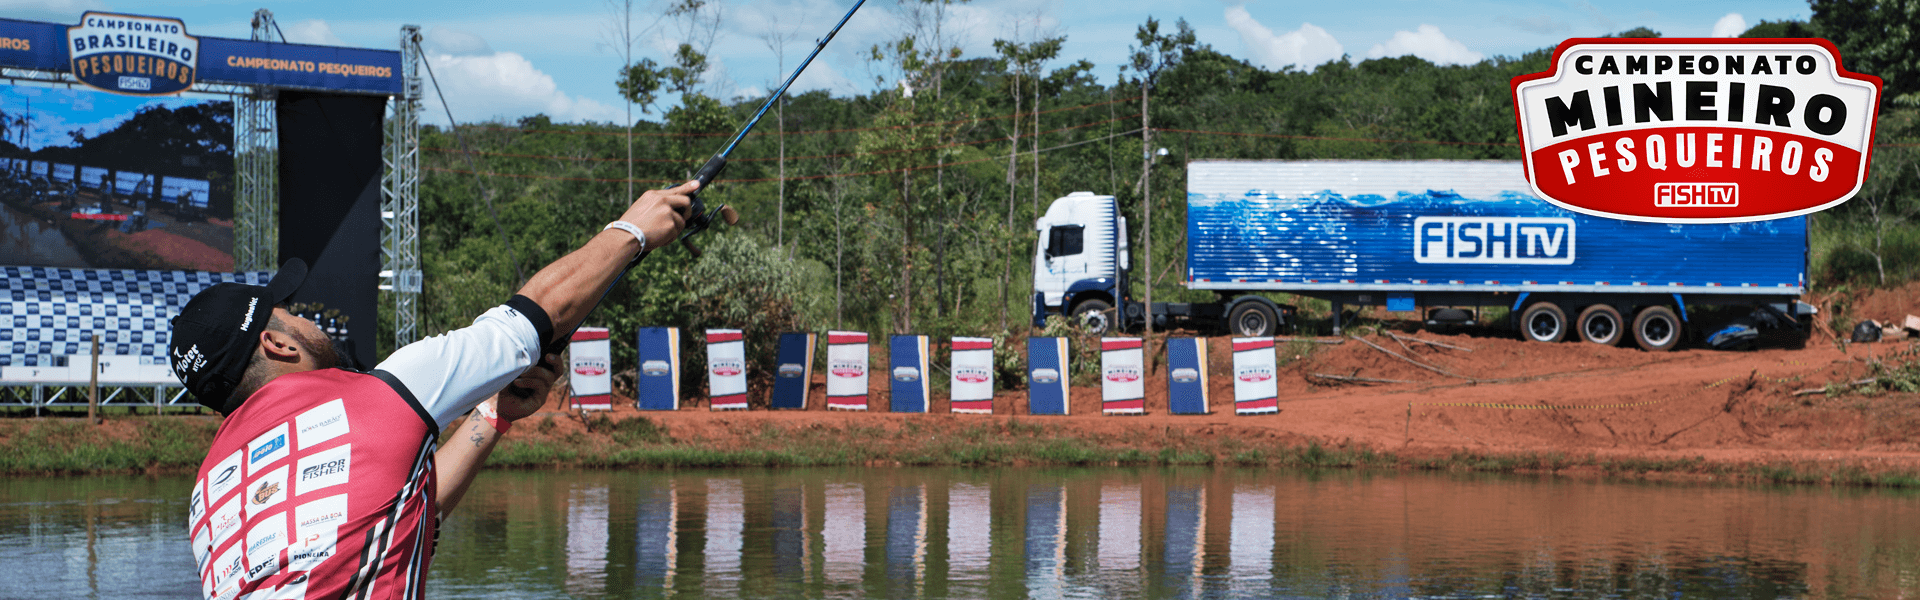 Uberlândia sedia maior campeonato de pesca esportiva de MG